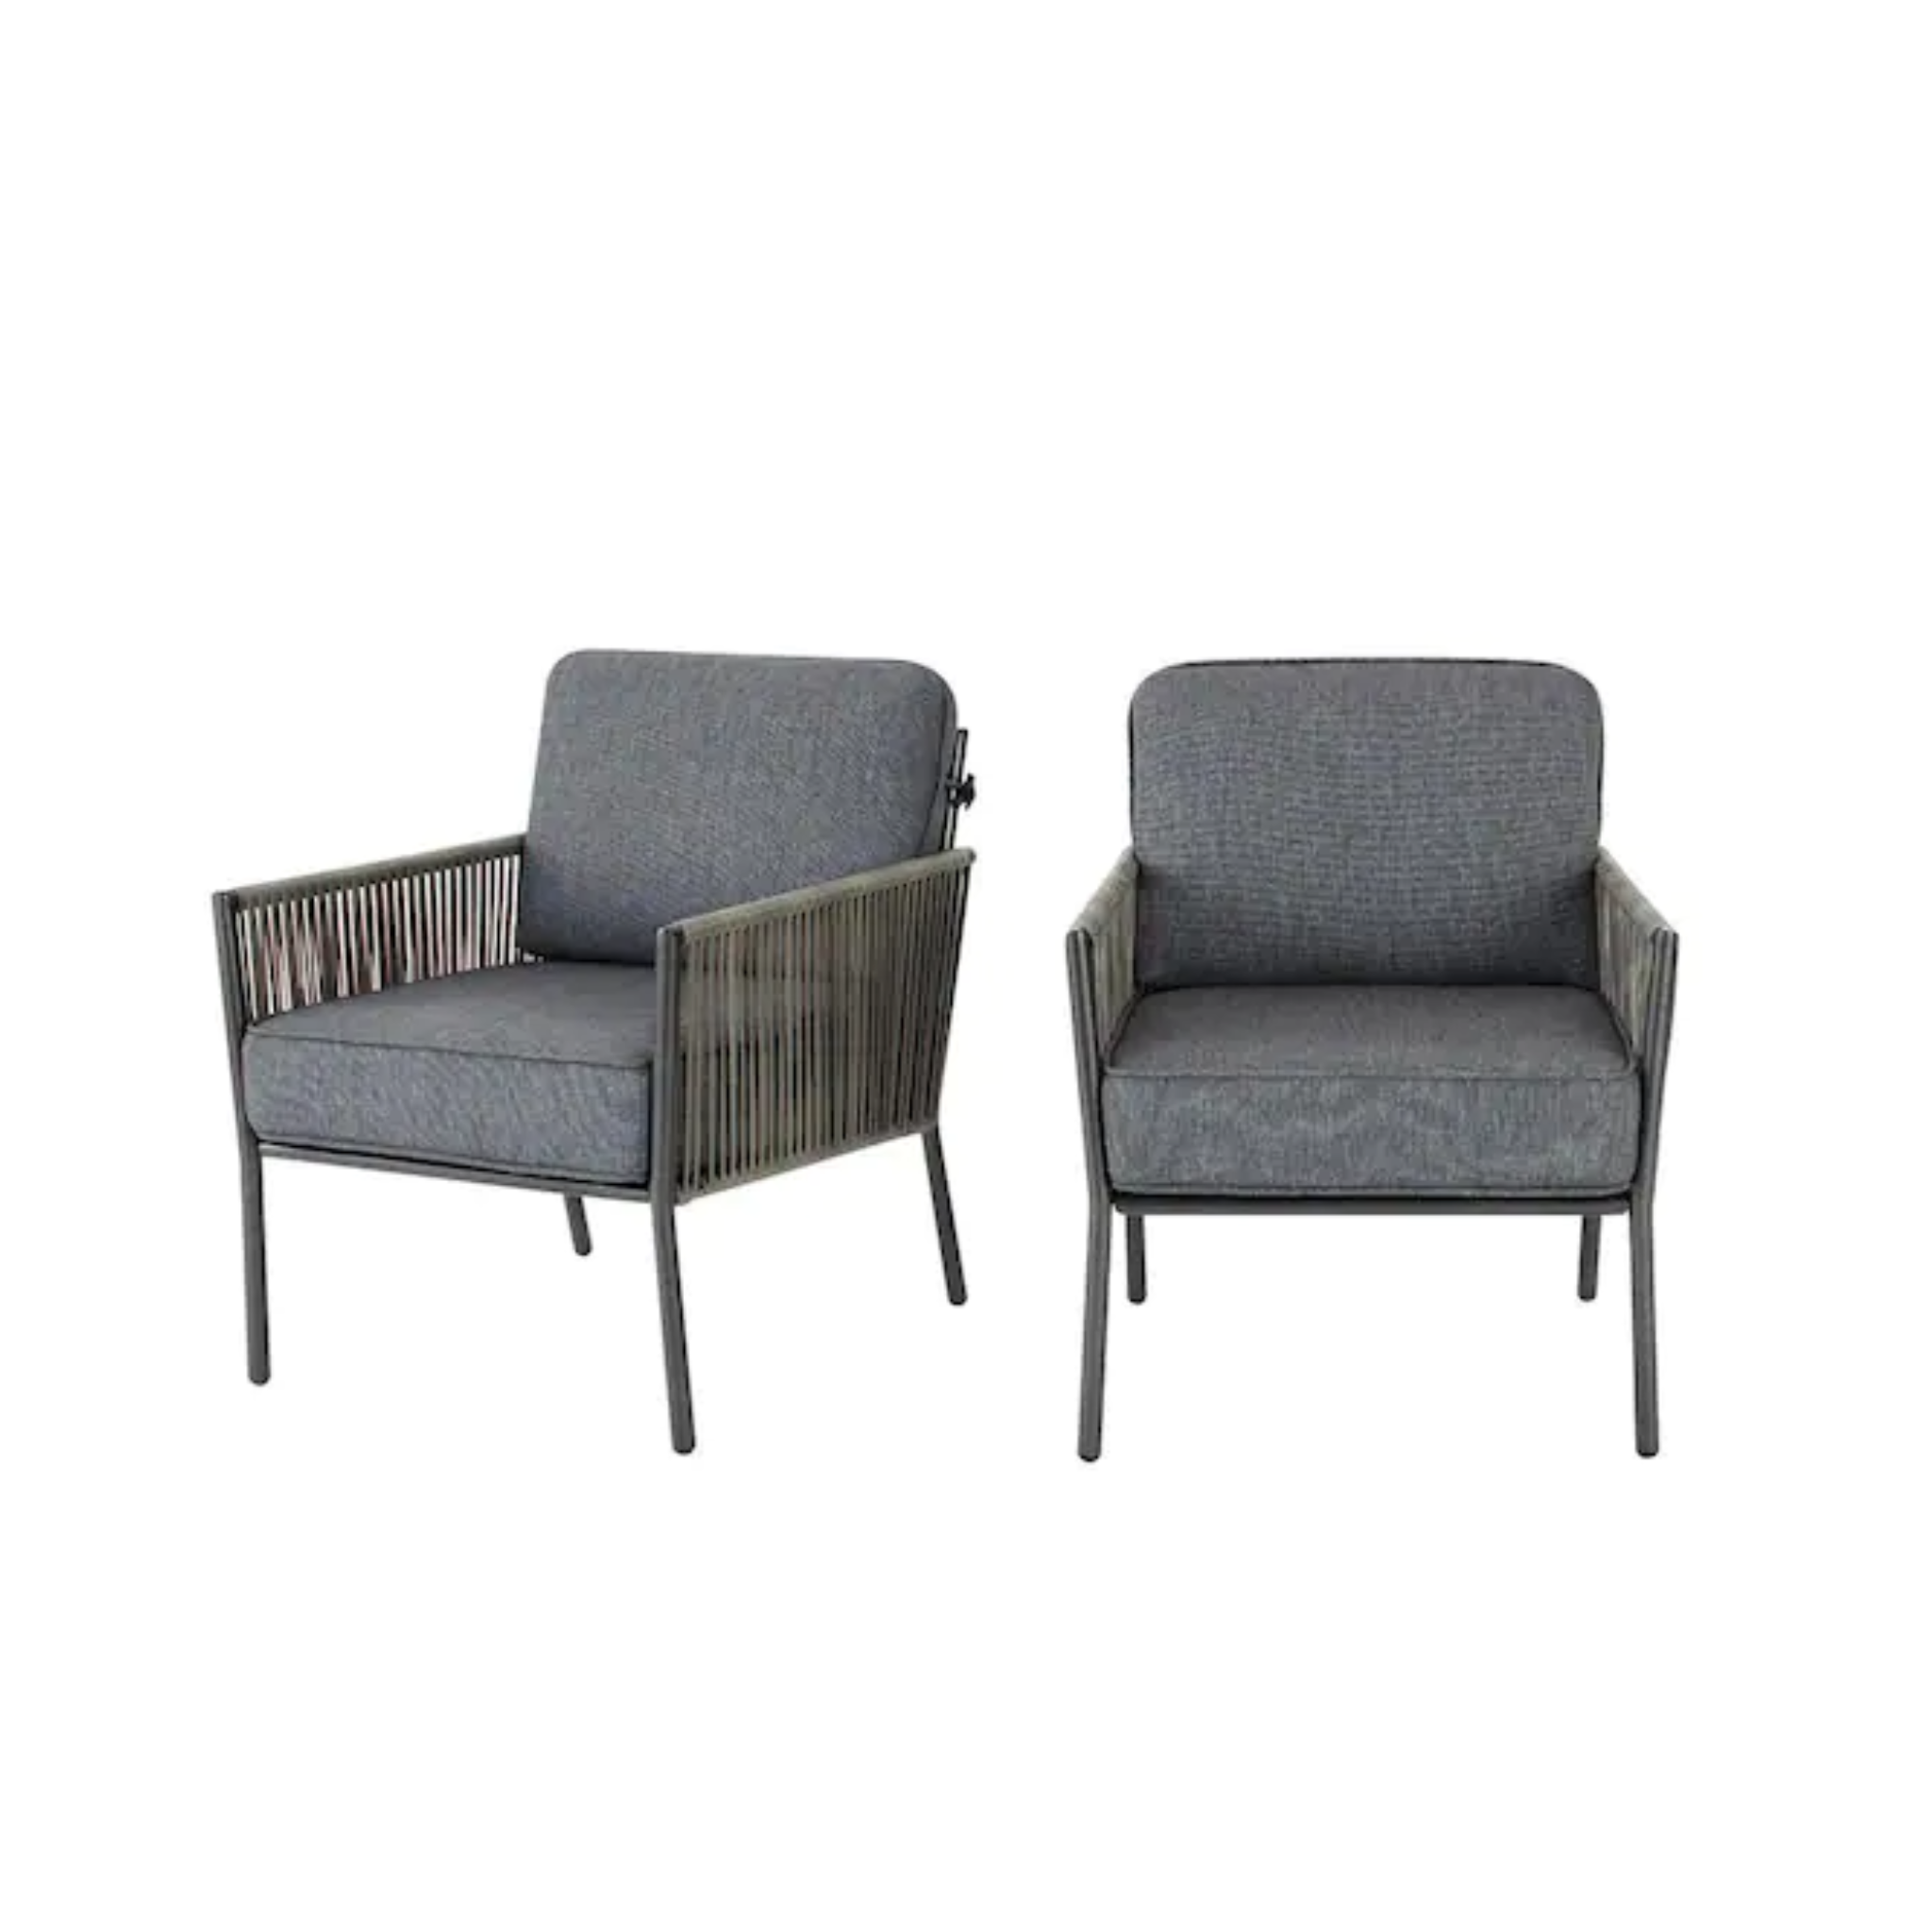 2-Pack Hampton Bay Tolston Wicker Outdoor Patio Lounge Chair w/ Cushions